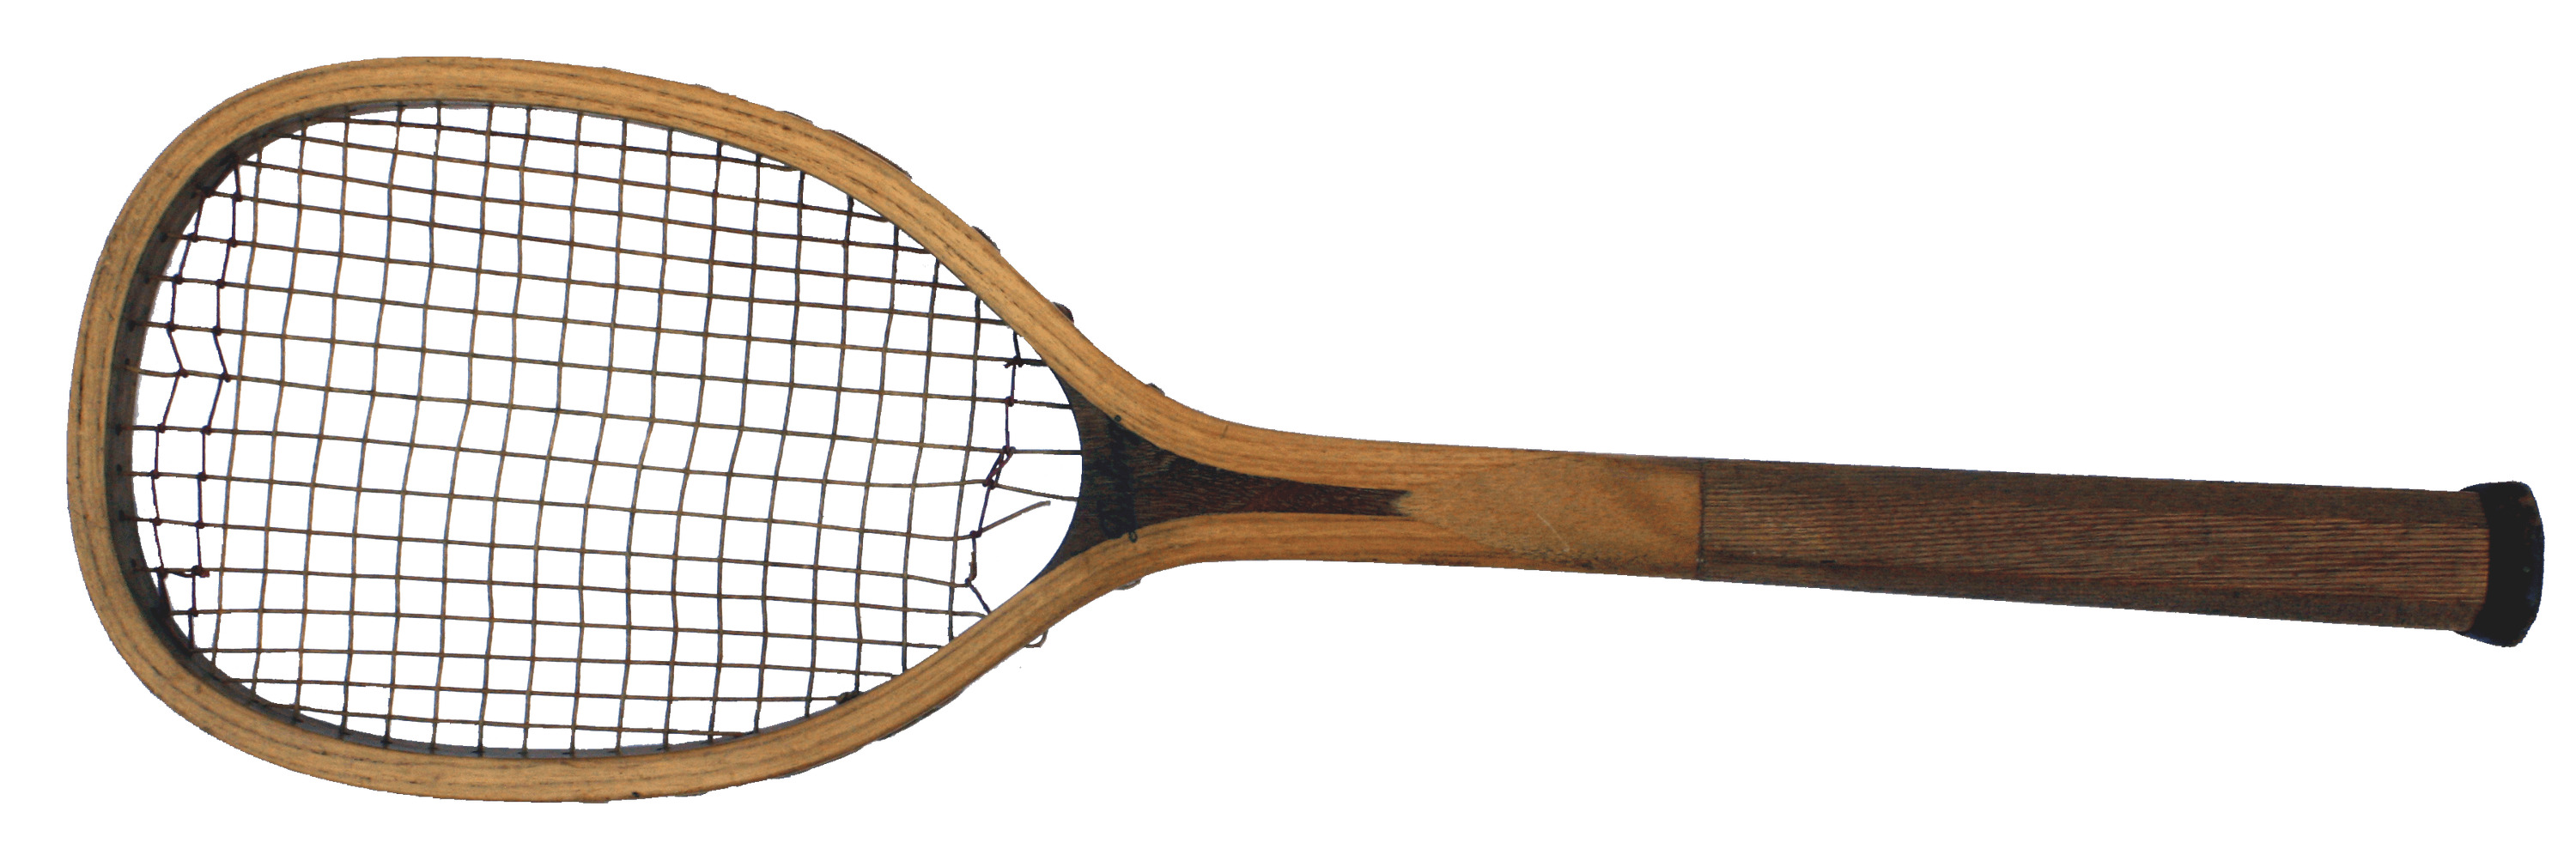 Antique Tennis Racket icons